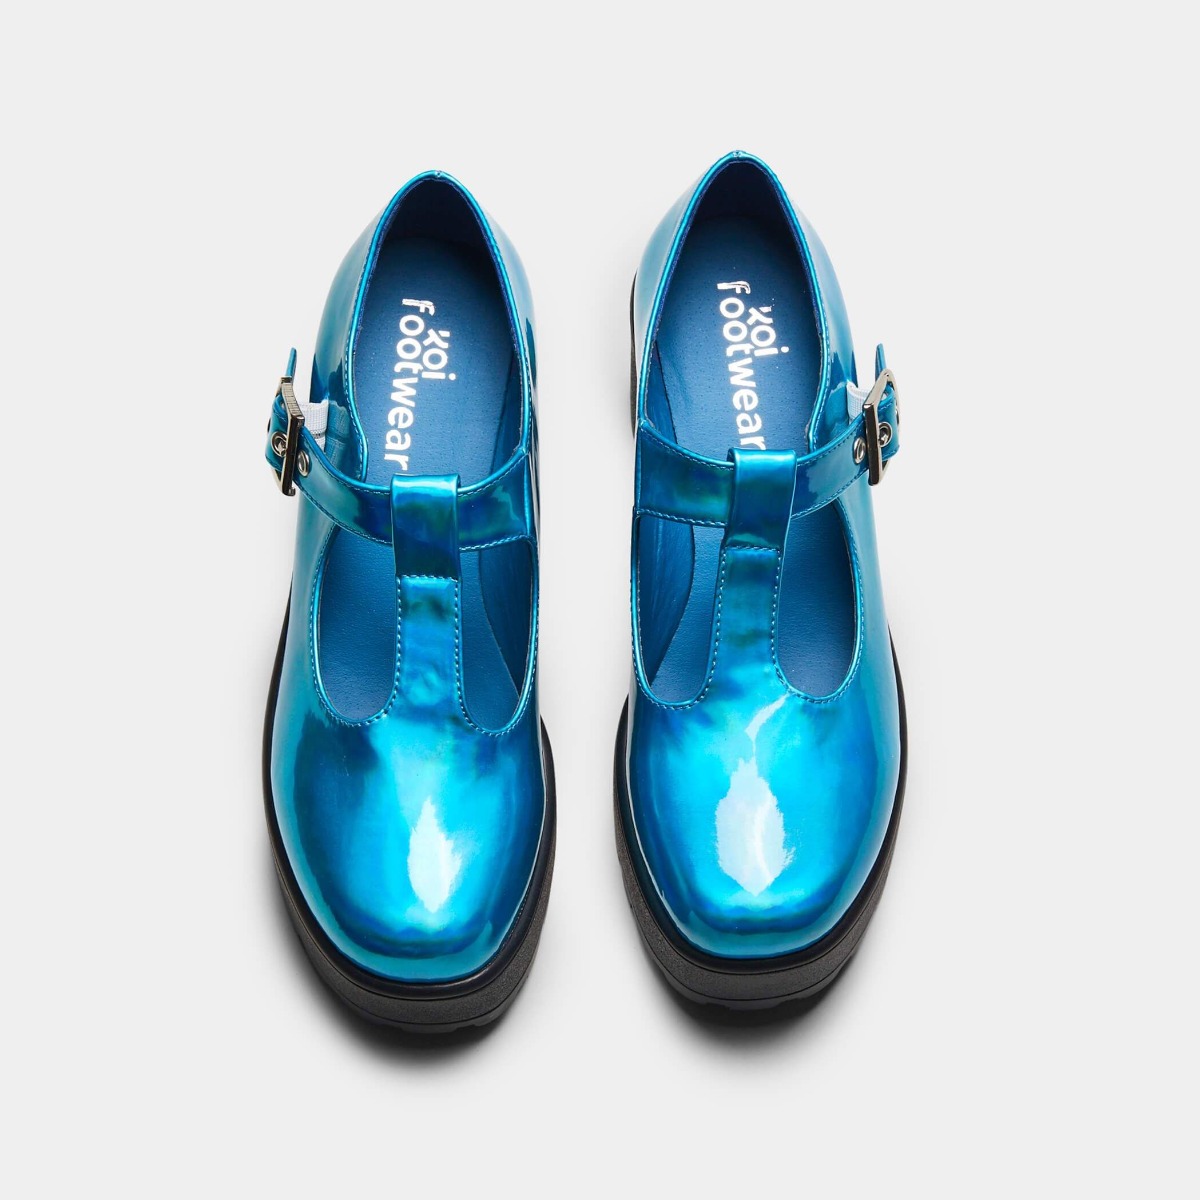 kfnd35mblub_chaussures-mary-janes-lolita-glam-rock-sai-bleu-metallique